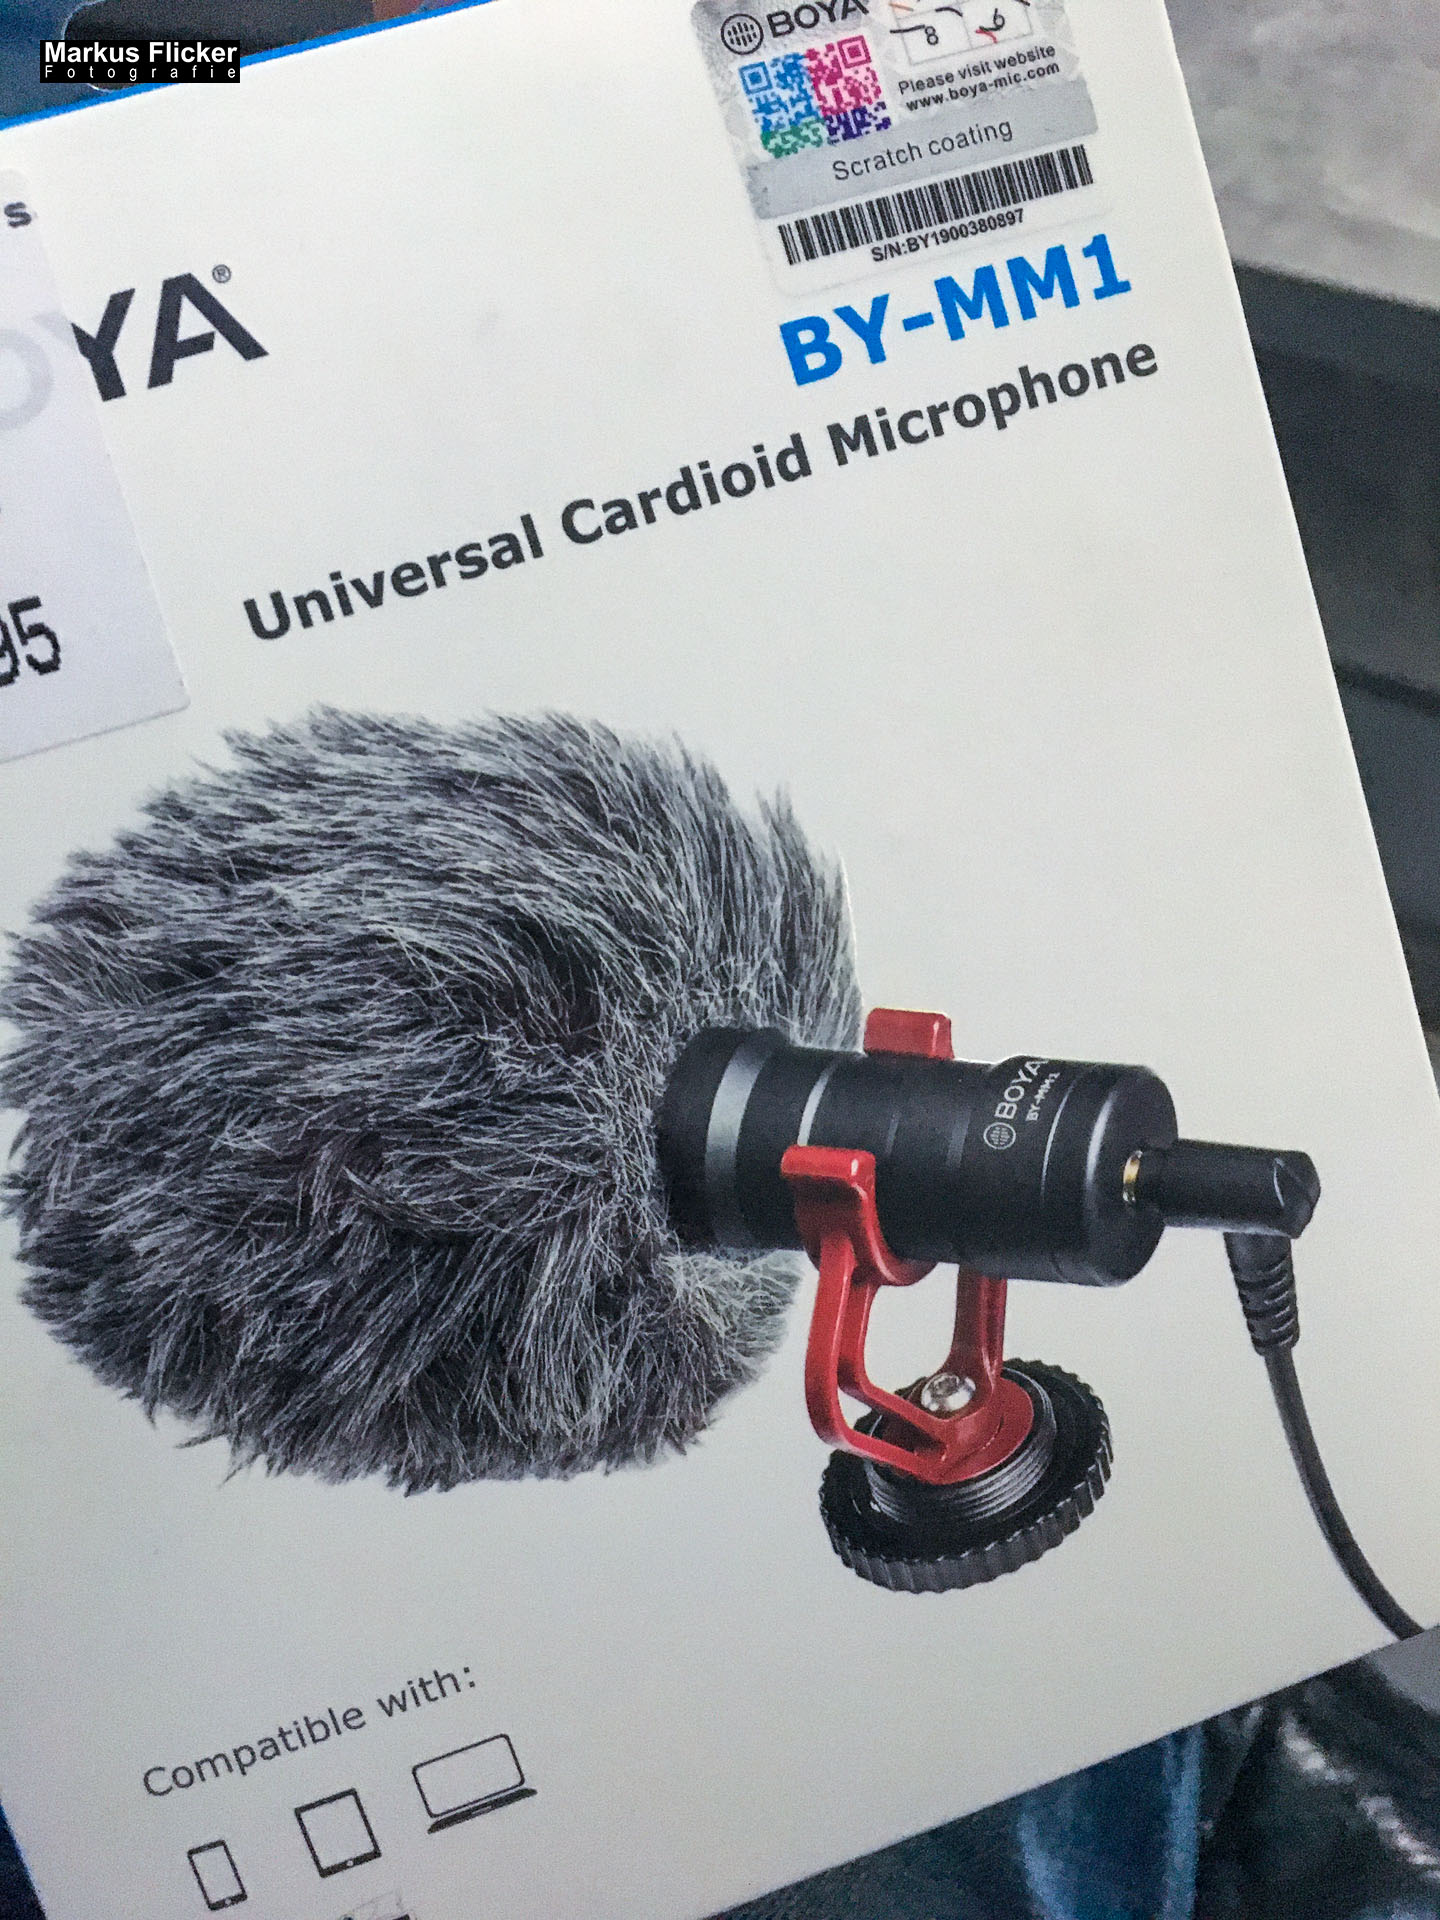 BOYA BY-MM1 Universal Cardioid Microphone Deutsch / German